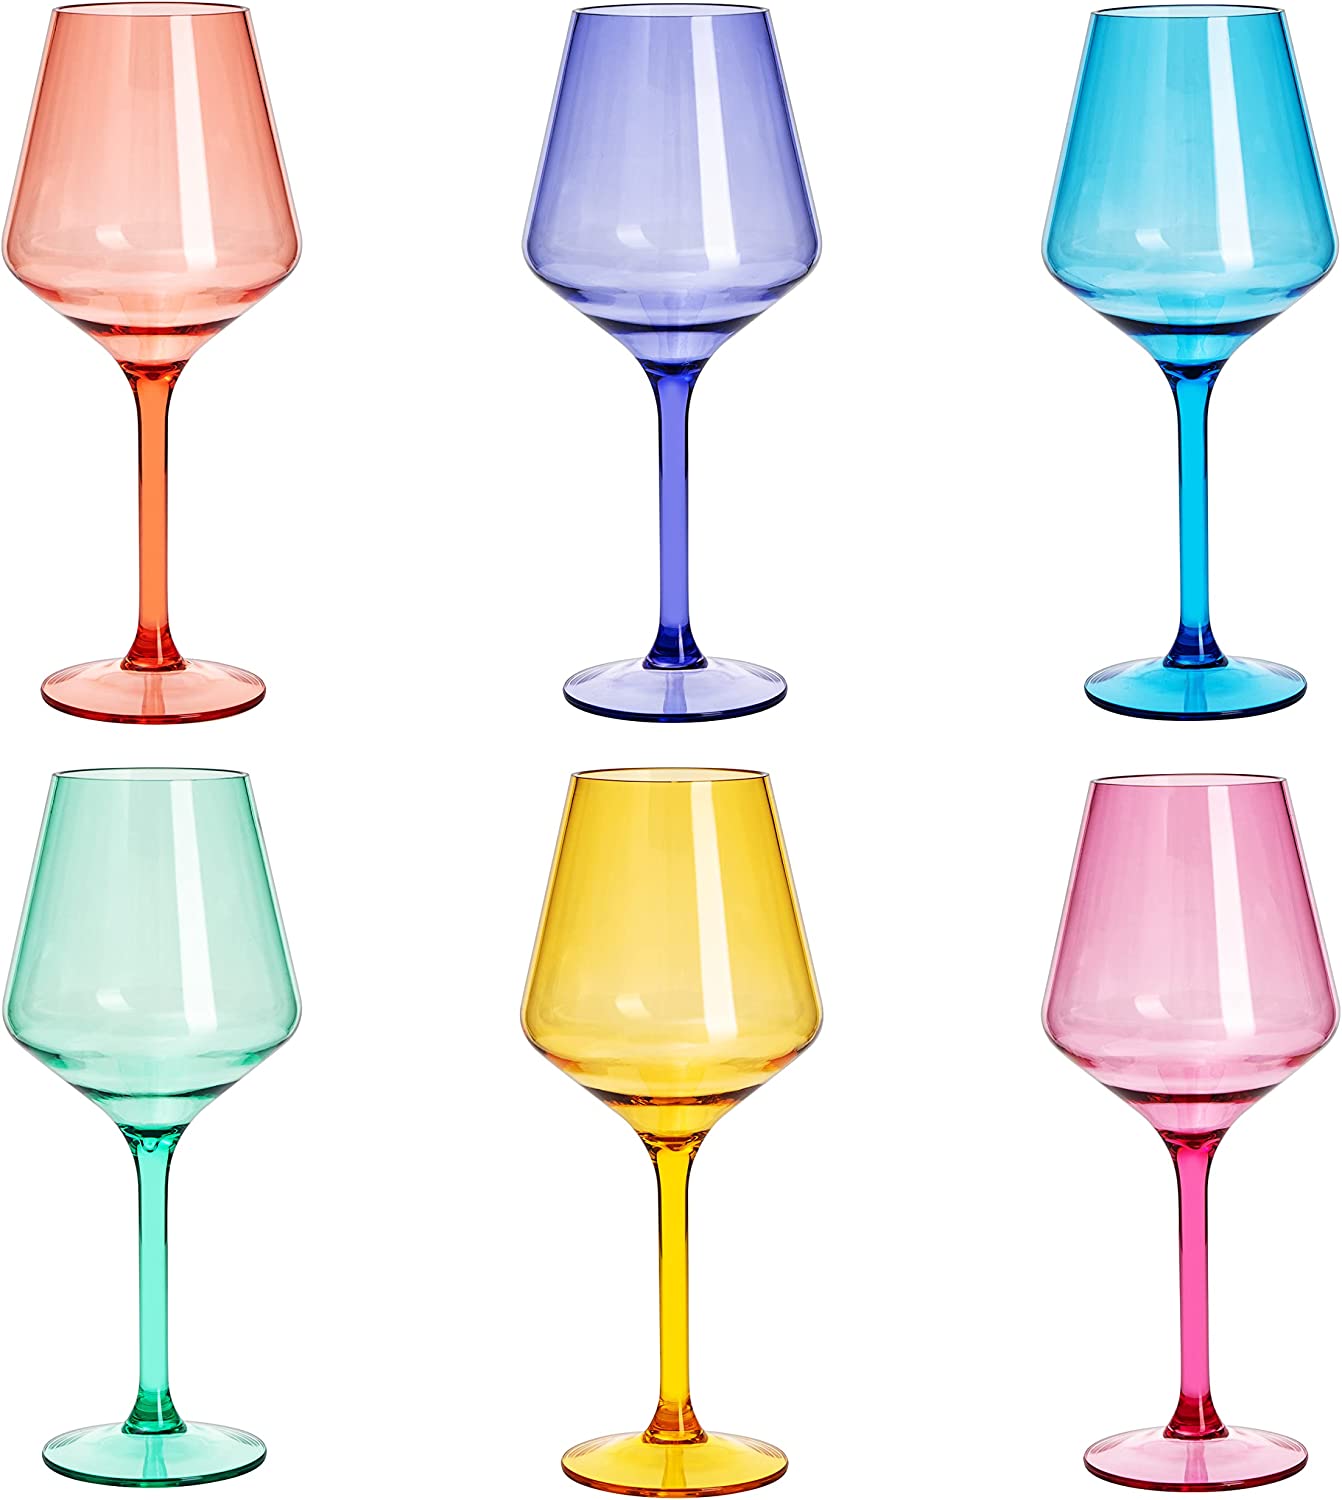 Leadingware Acrylic Royals 10 oz. Wine Glass